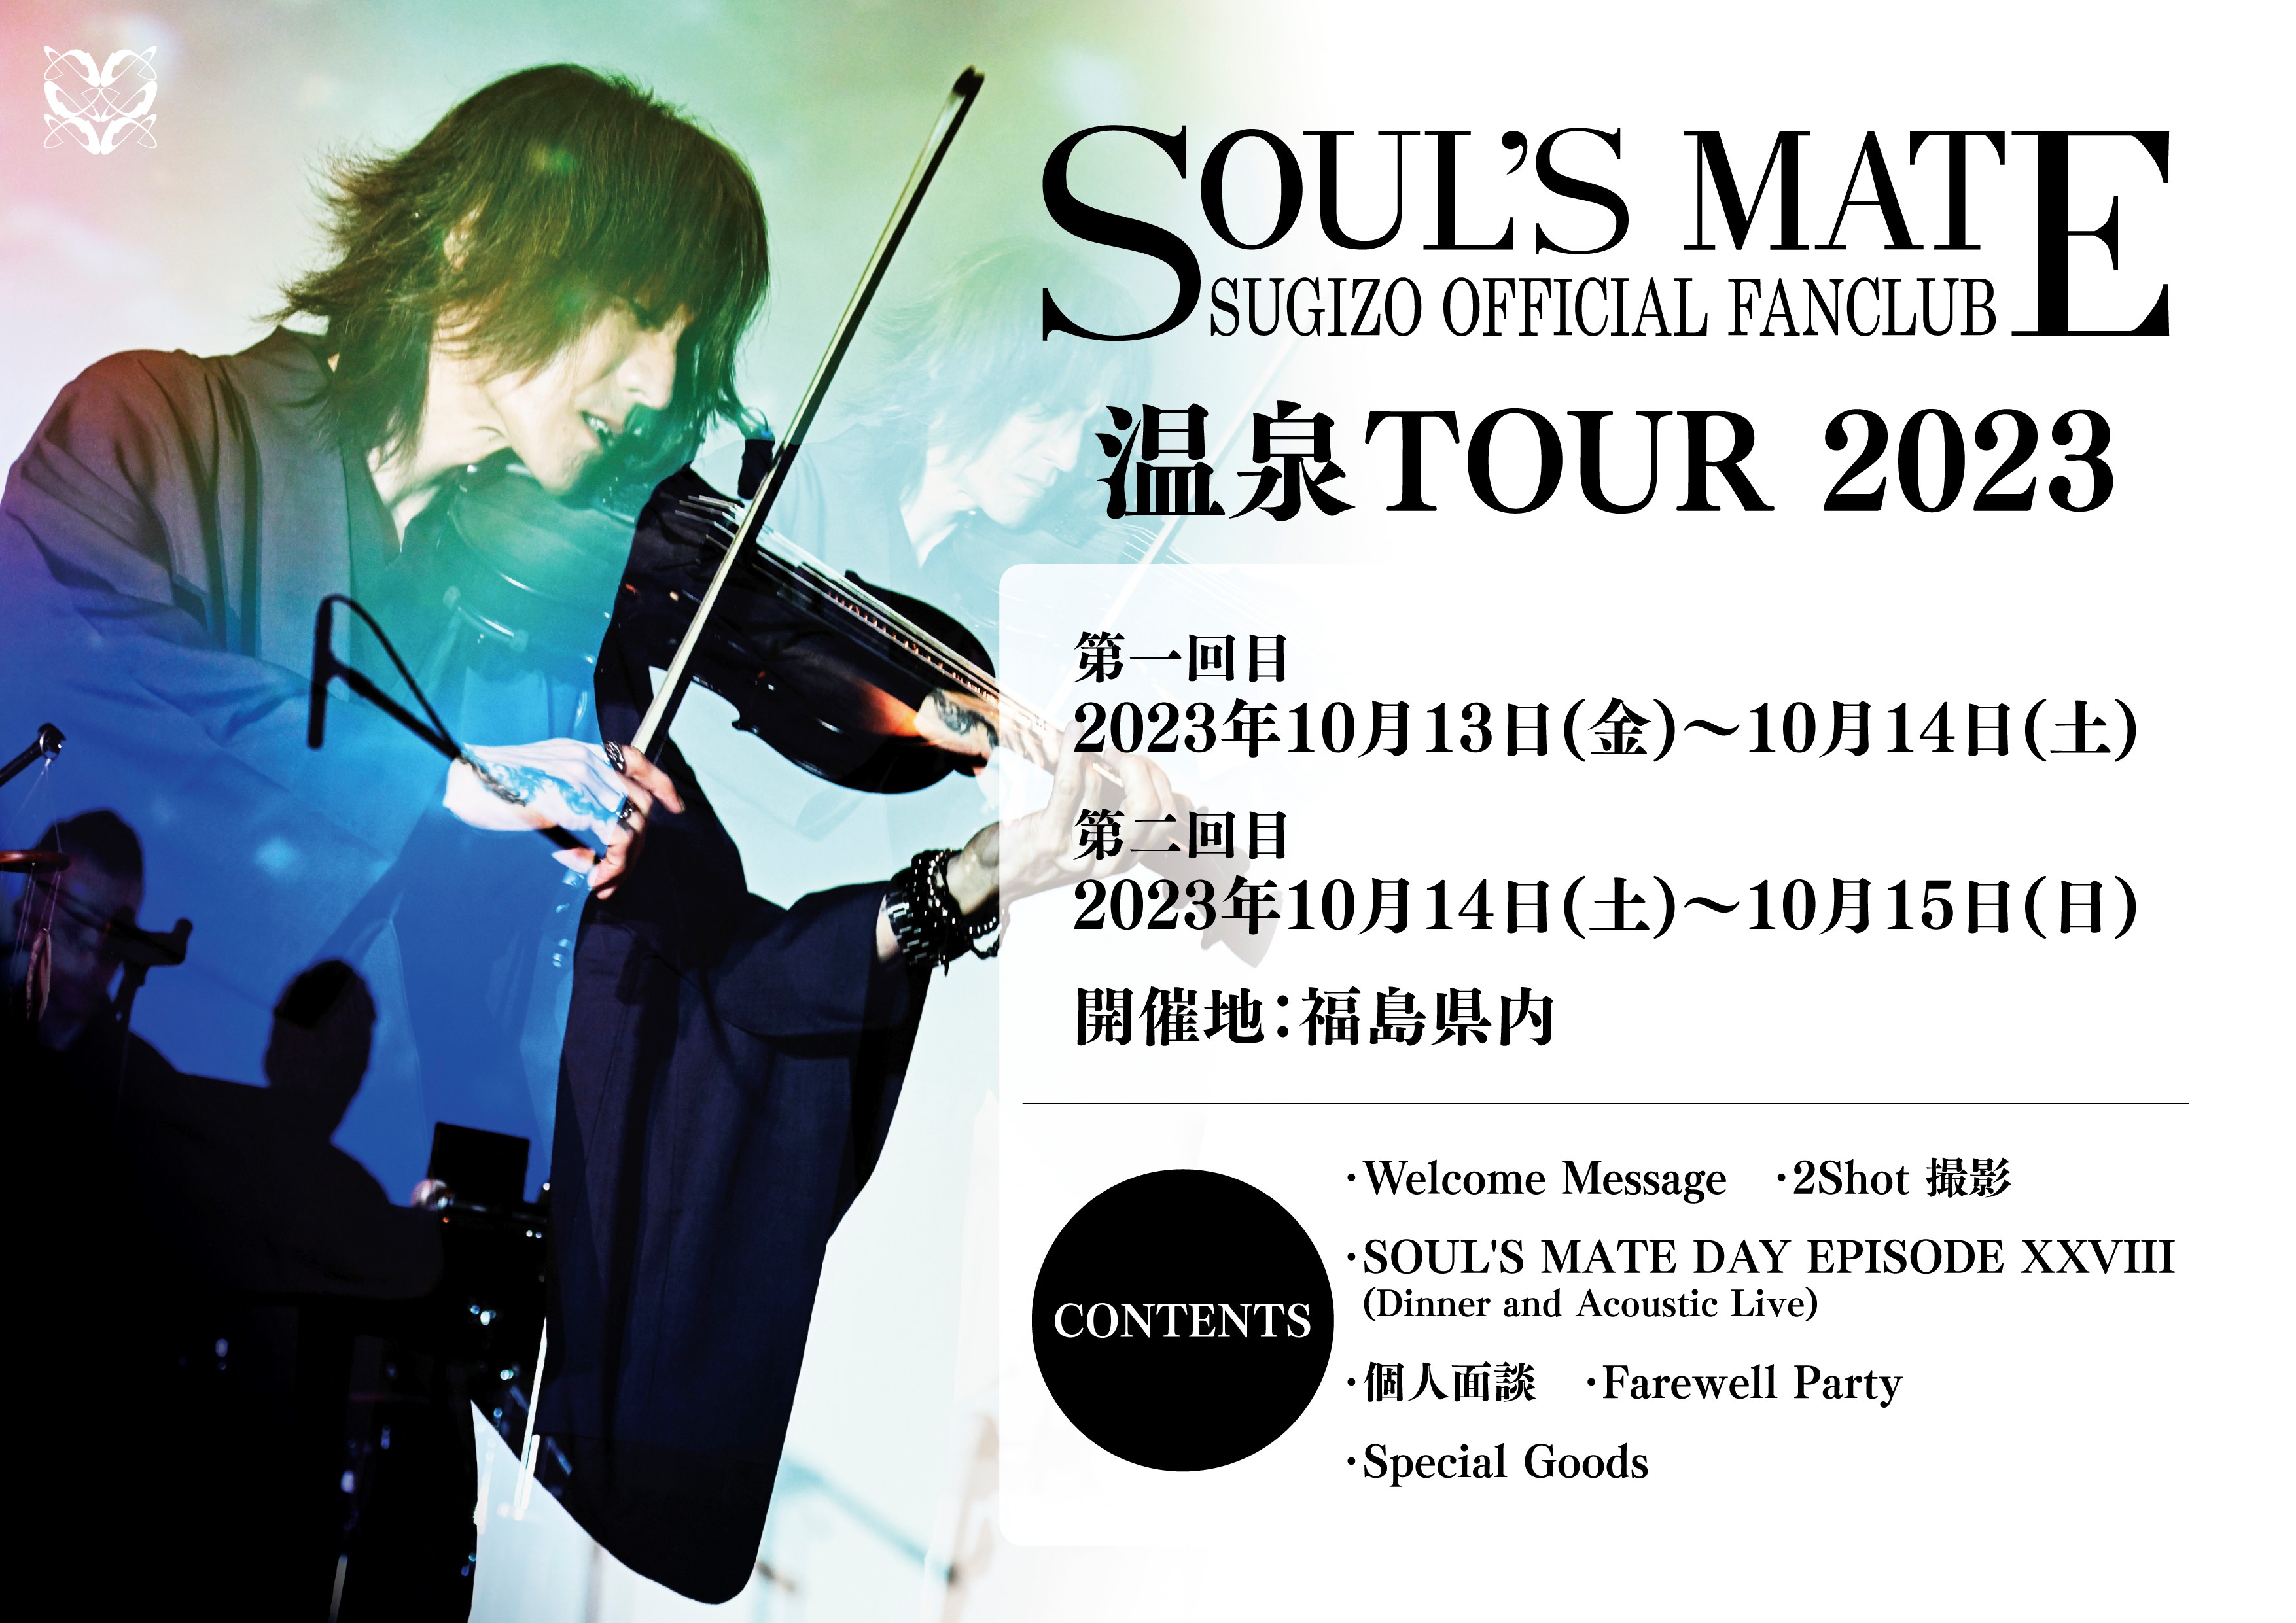 SOULfS MATE TOUR2023